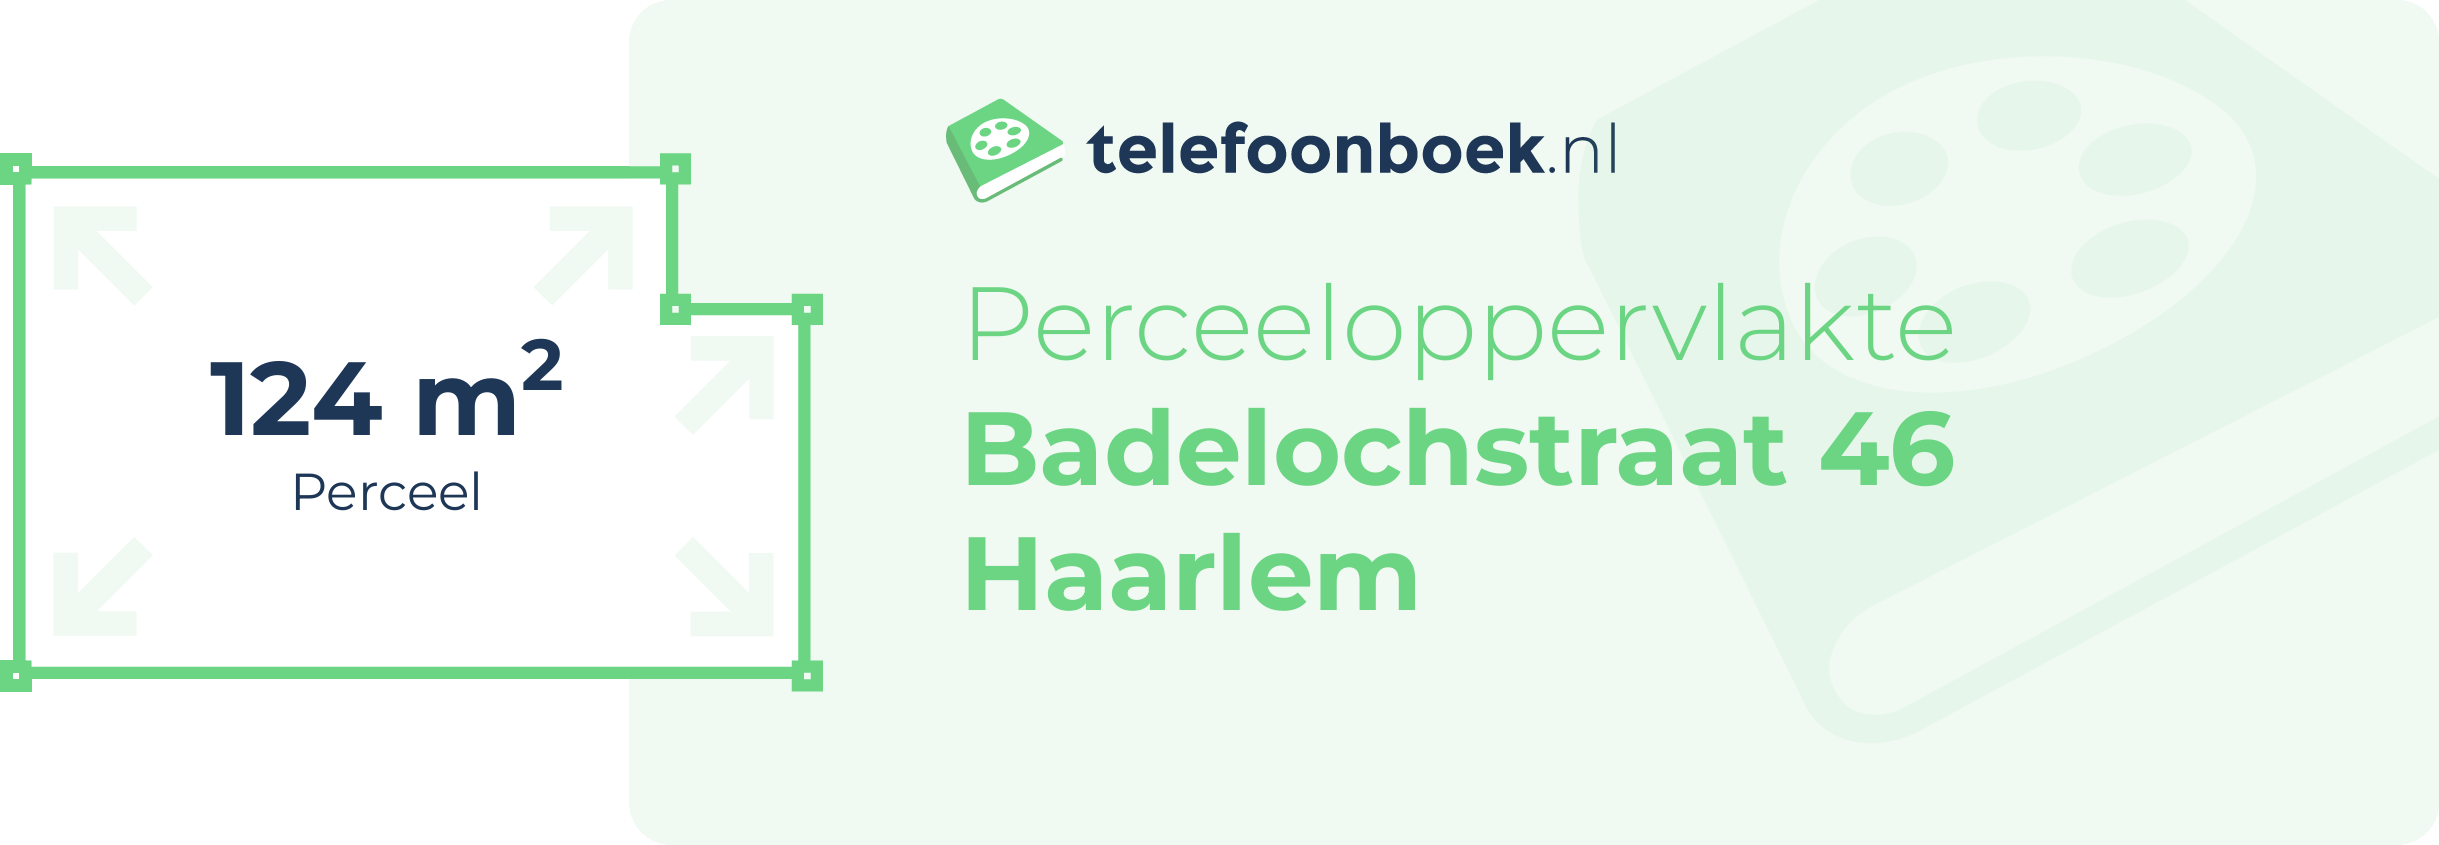 Perceeloppervlakte Badelochstraat 46 Haarlem